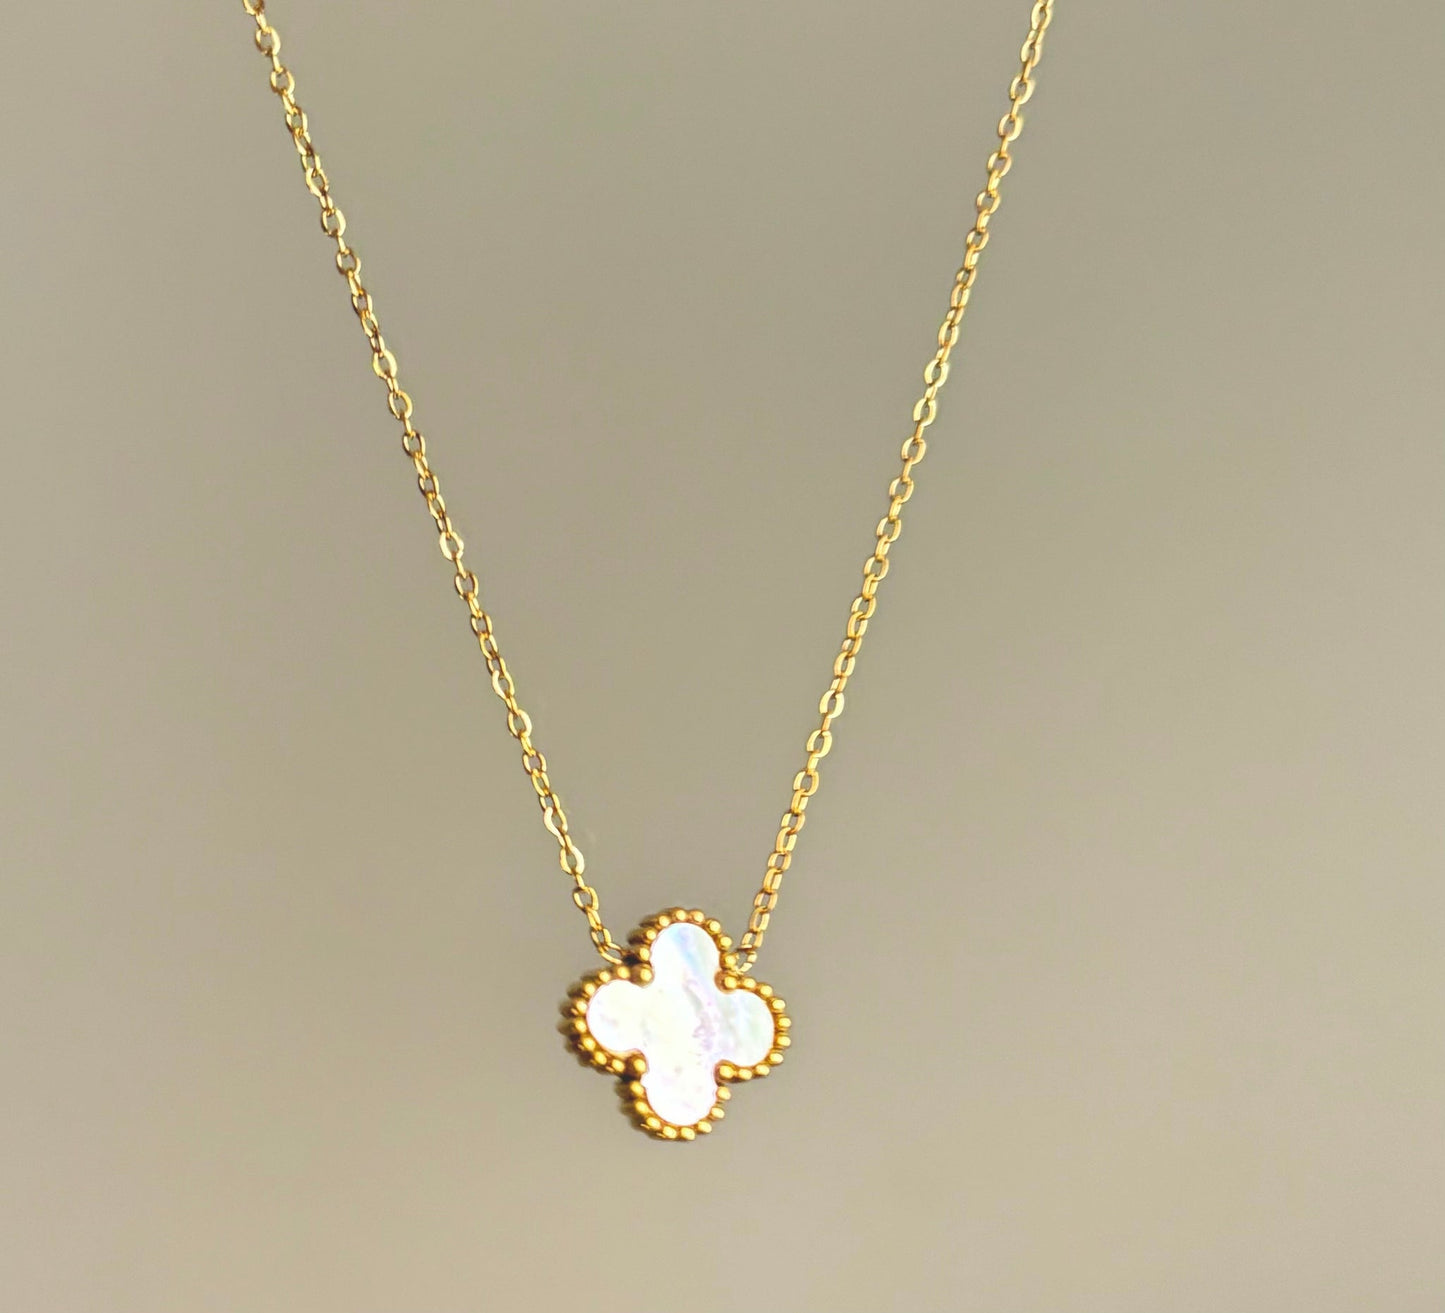 Four-leaf clover necklace